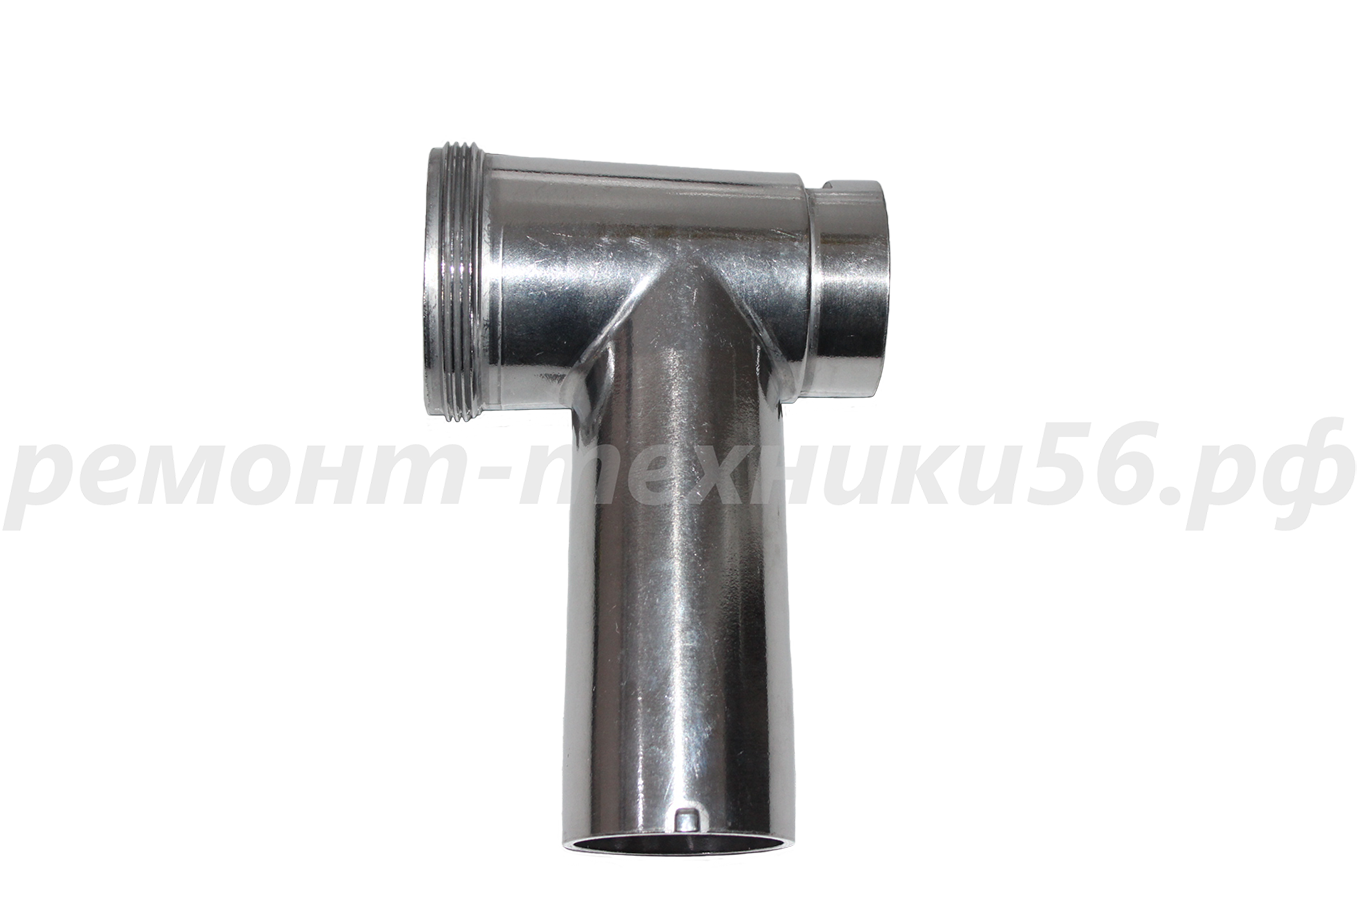 Корпус алюминиевый ЮМГИ 301153001 для мясорубки М21 Аксион - широкий ассортимент фото1